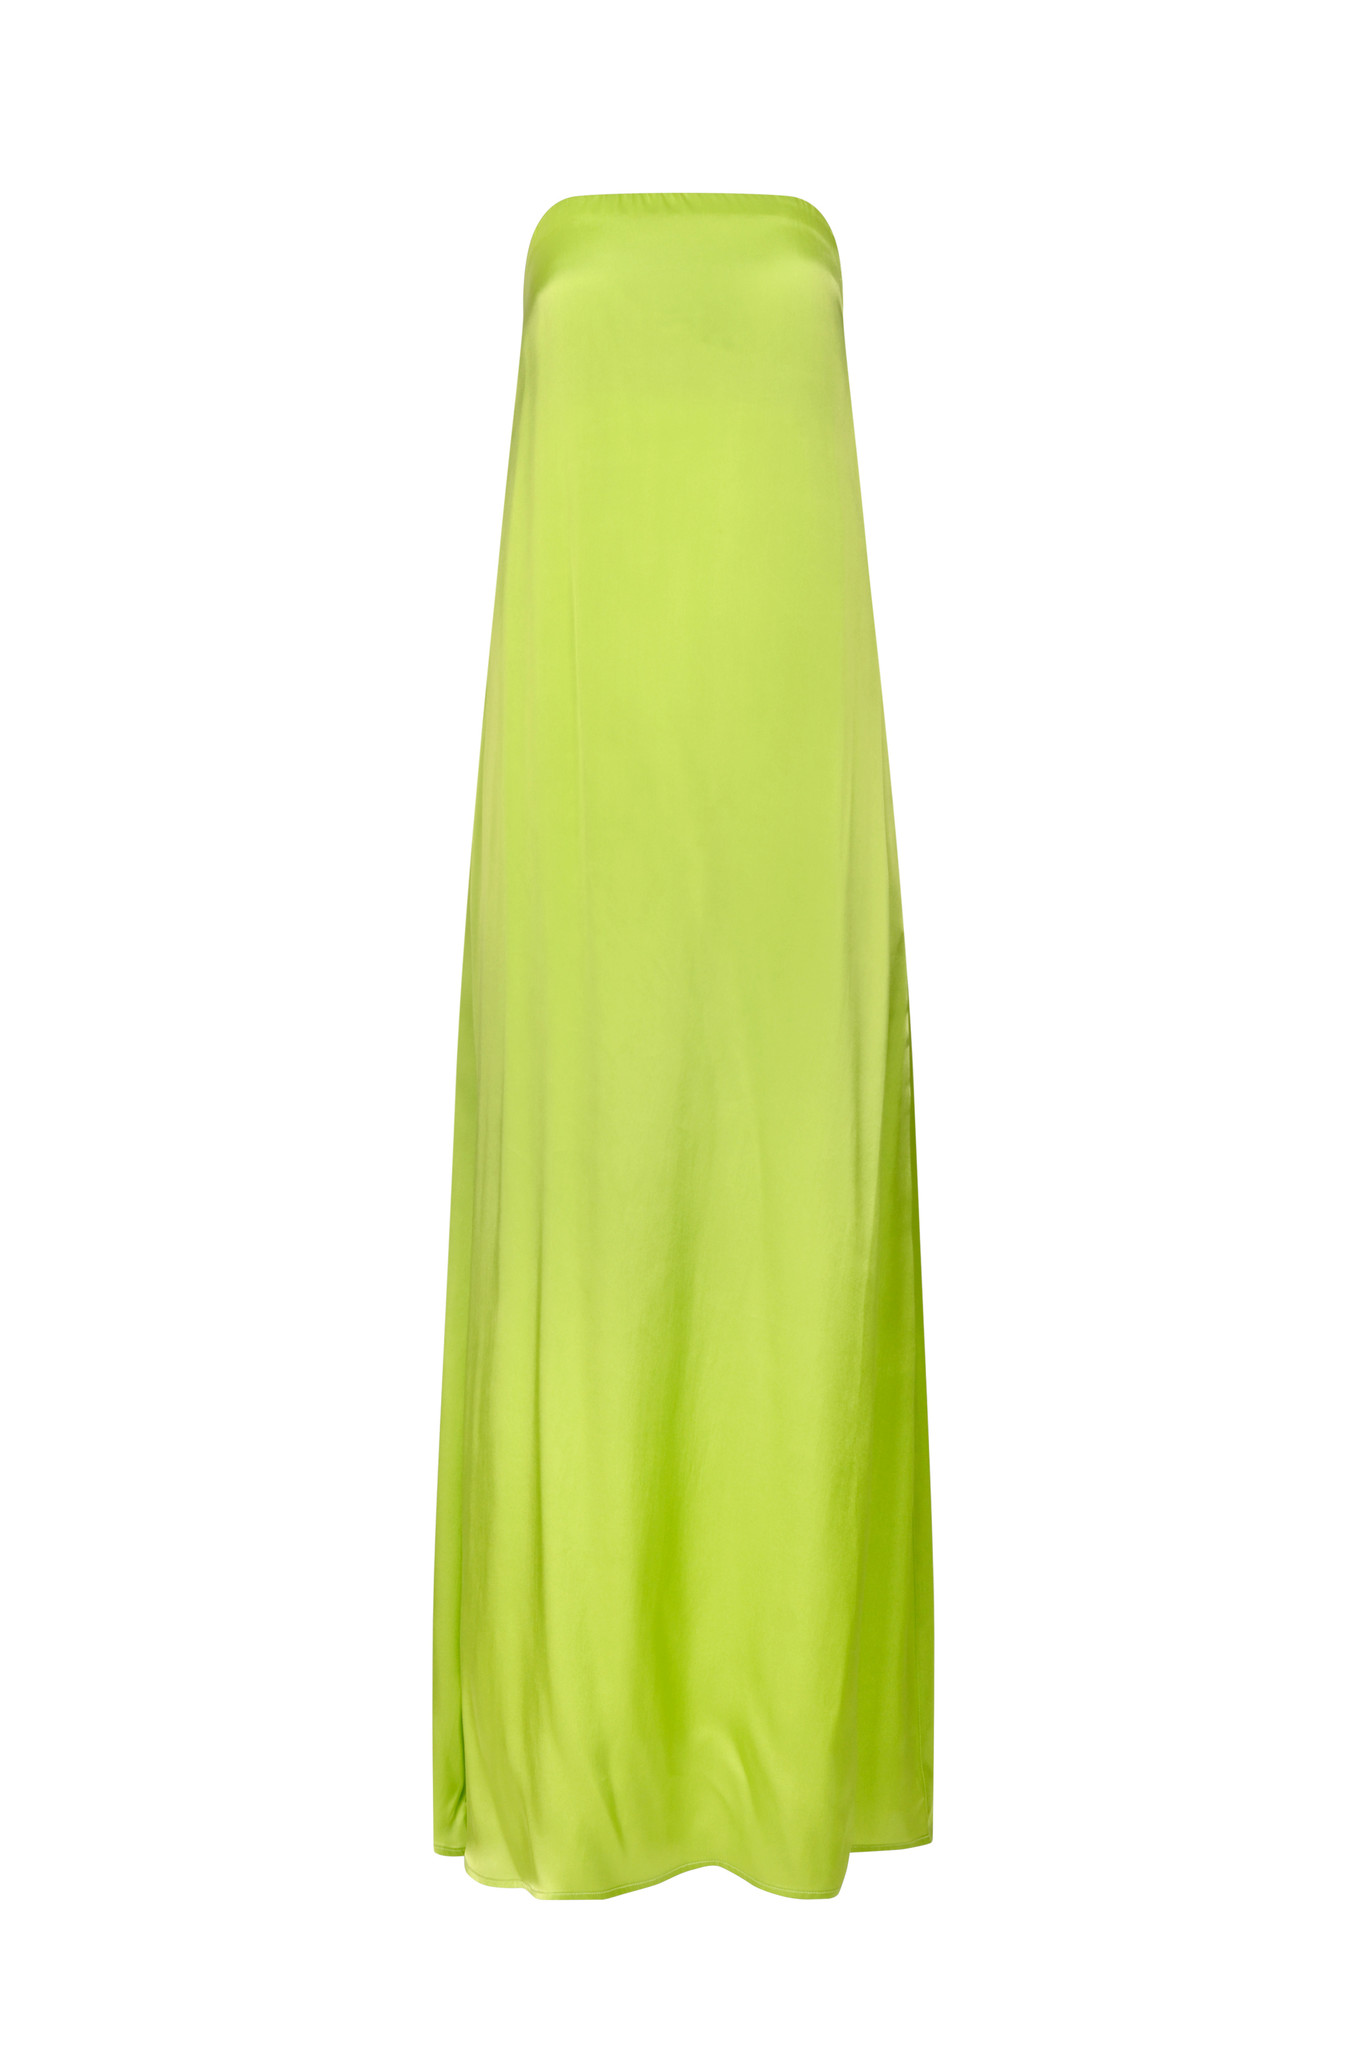 Lime Green Strapless Dress-1